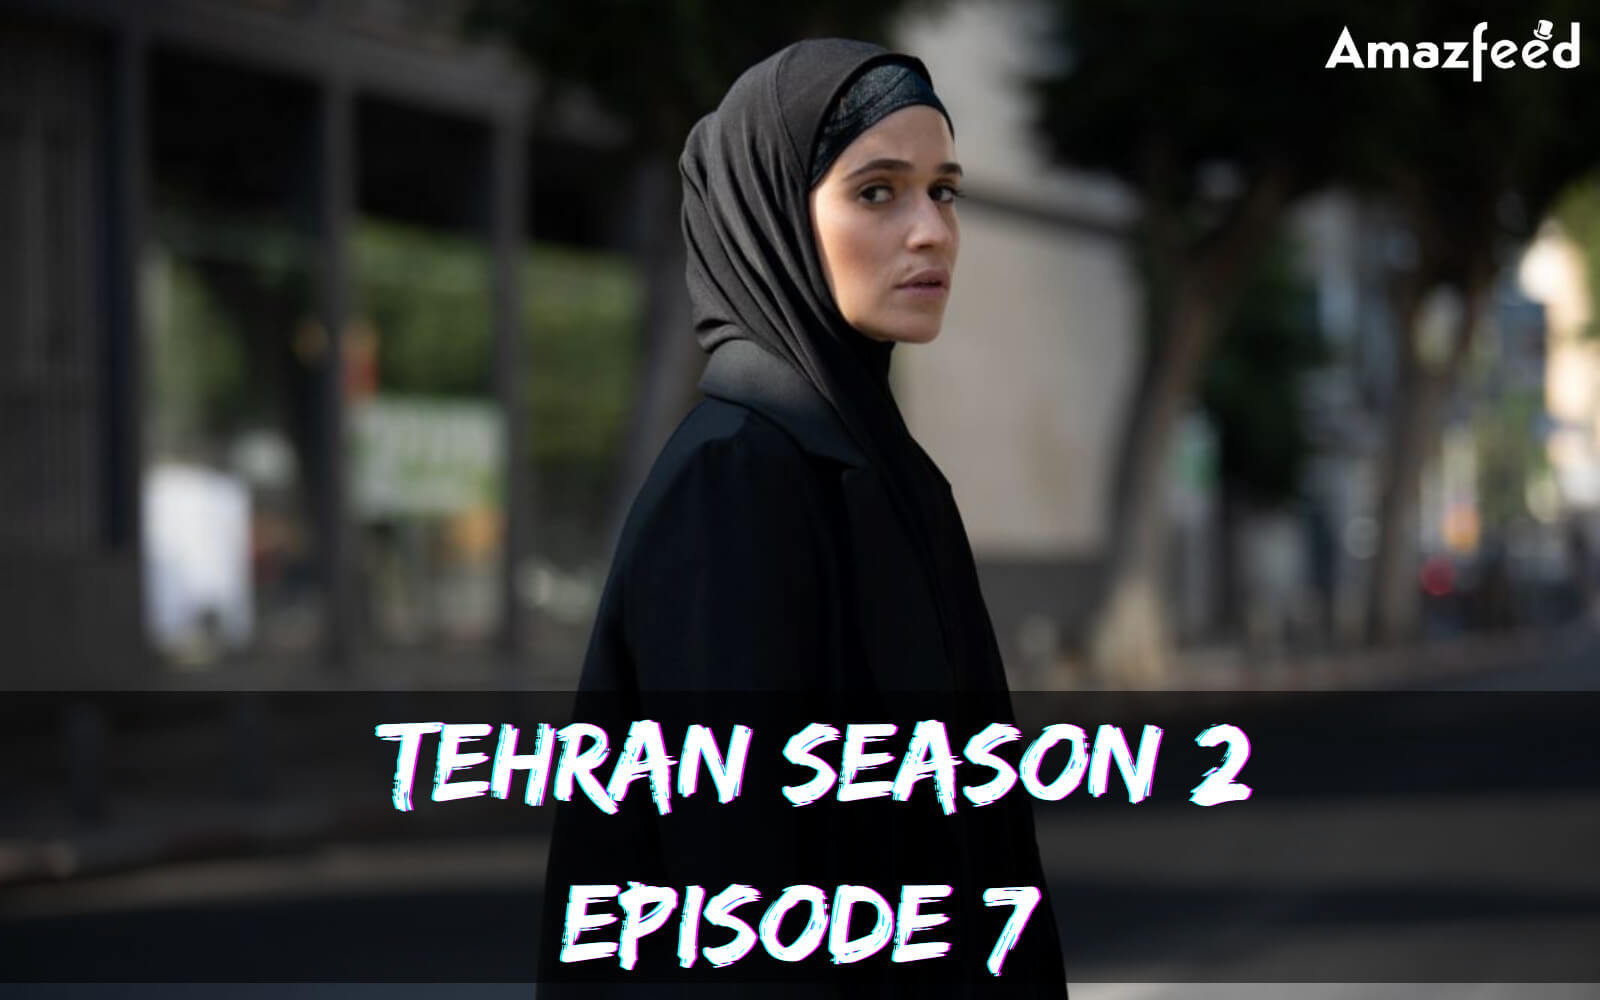 Tehran Season 2 Episode 7 release date